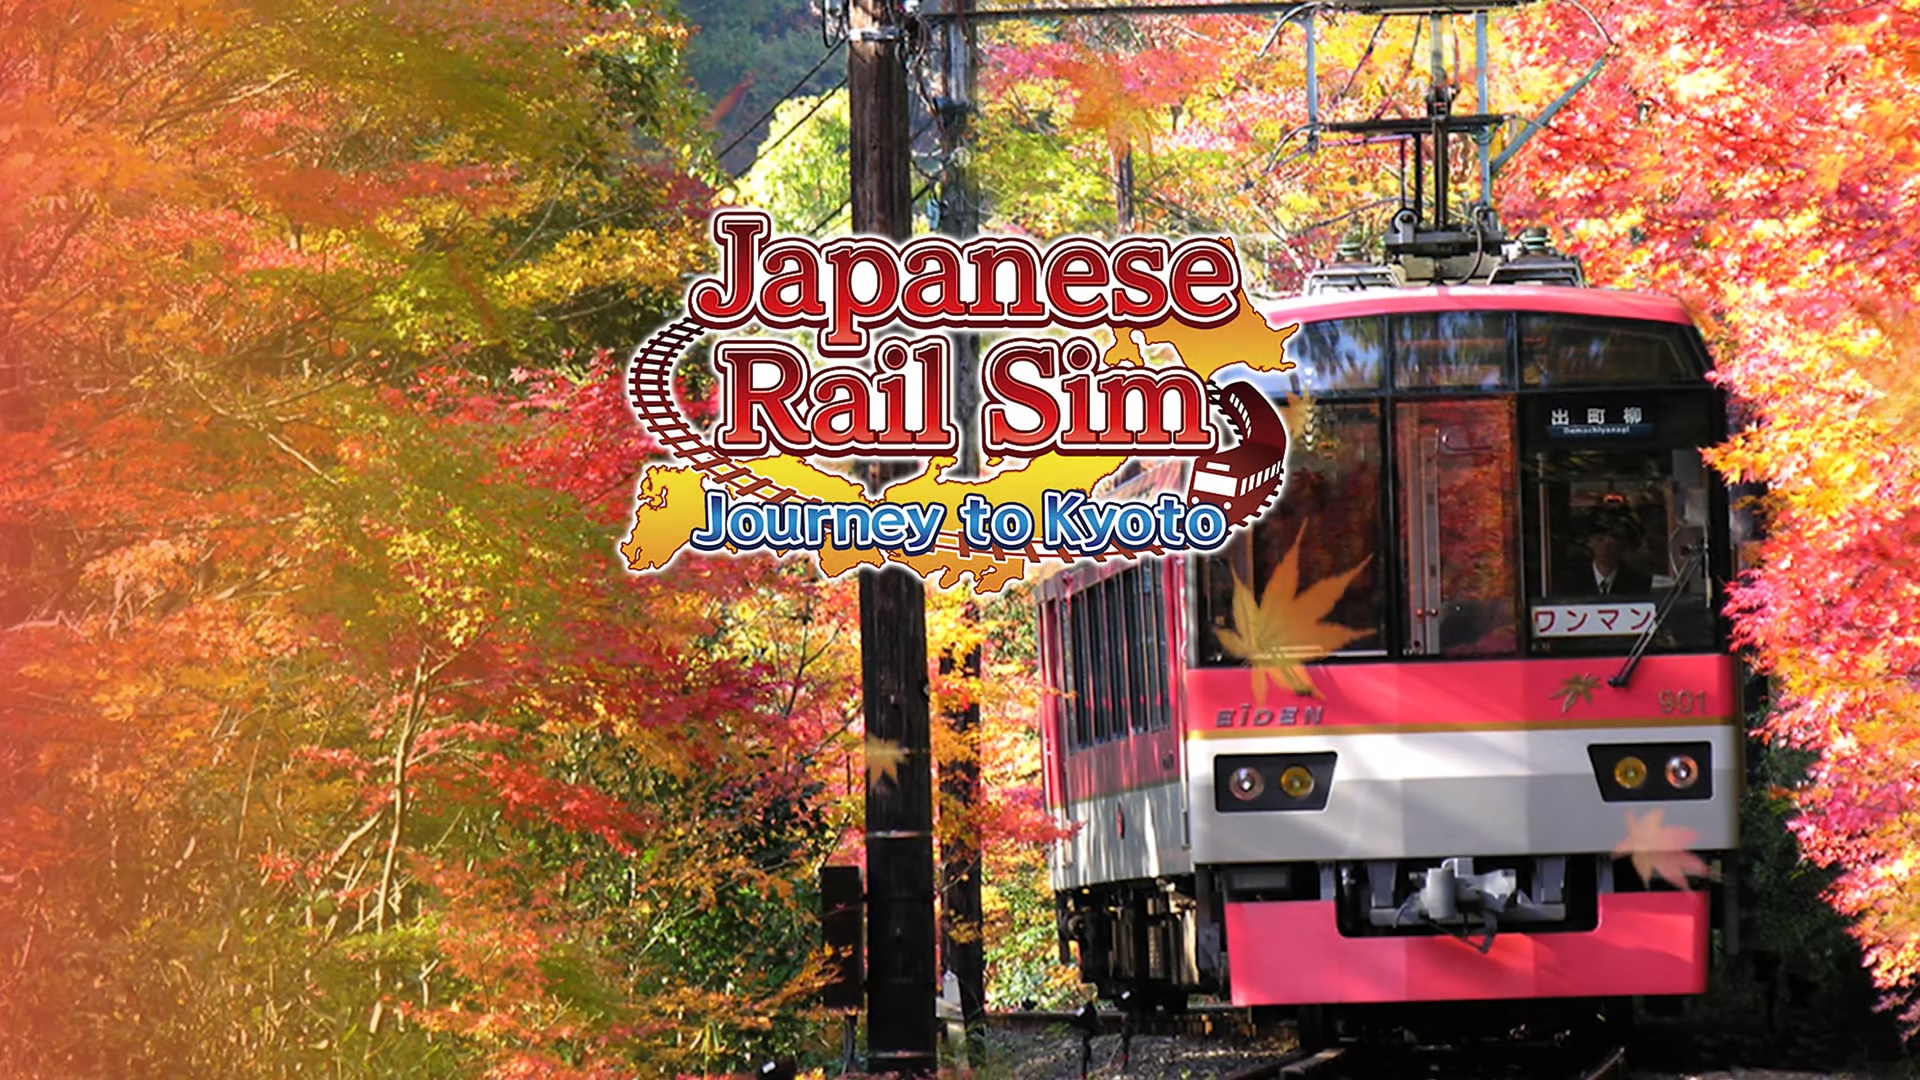 Japanese Rail Sim: Journey to Kyoto เกมจำลองขับรถไฟ ชมทิวทัศน์ประเทศญี่ปุ่น